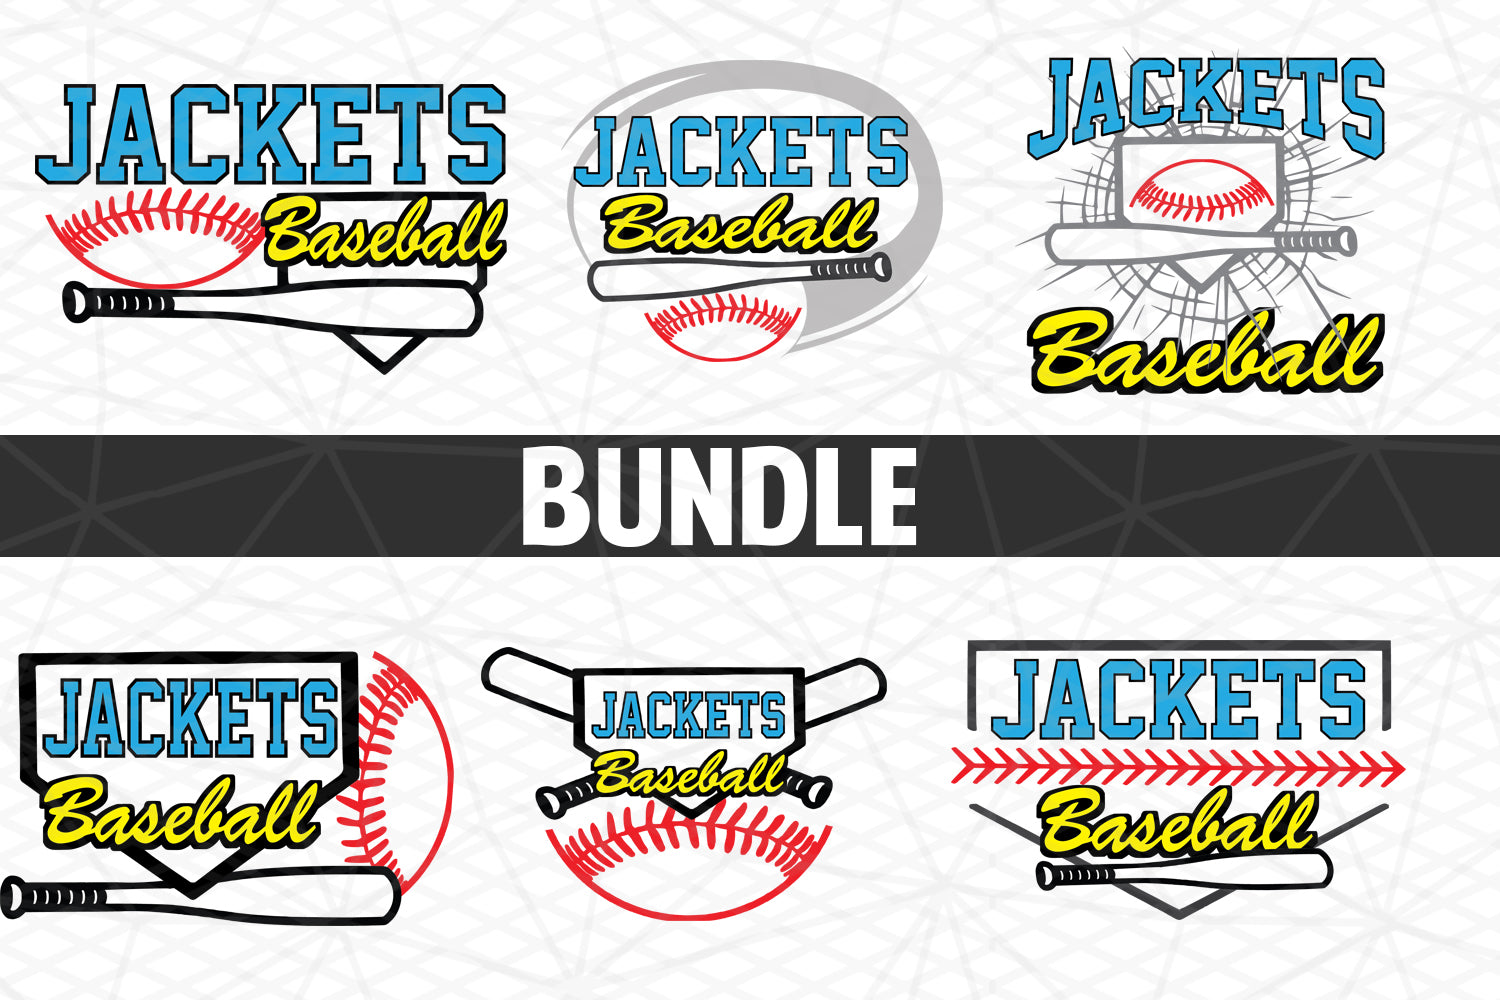 Baseball t-shirt design bundle - Buy t-shirt designs